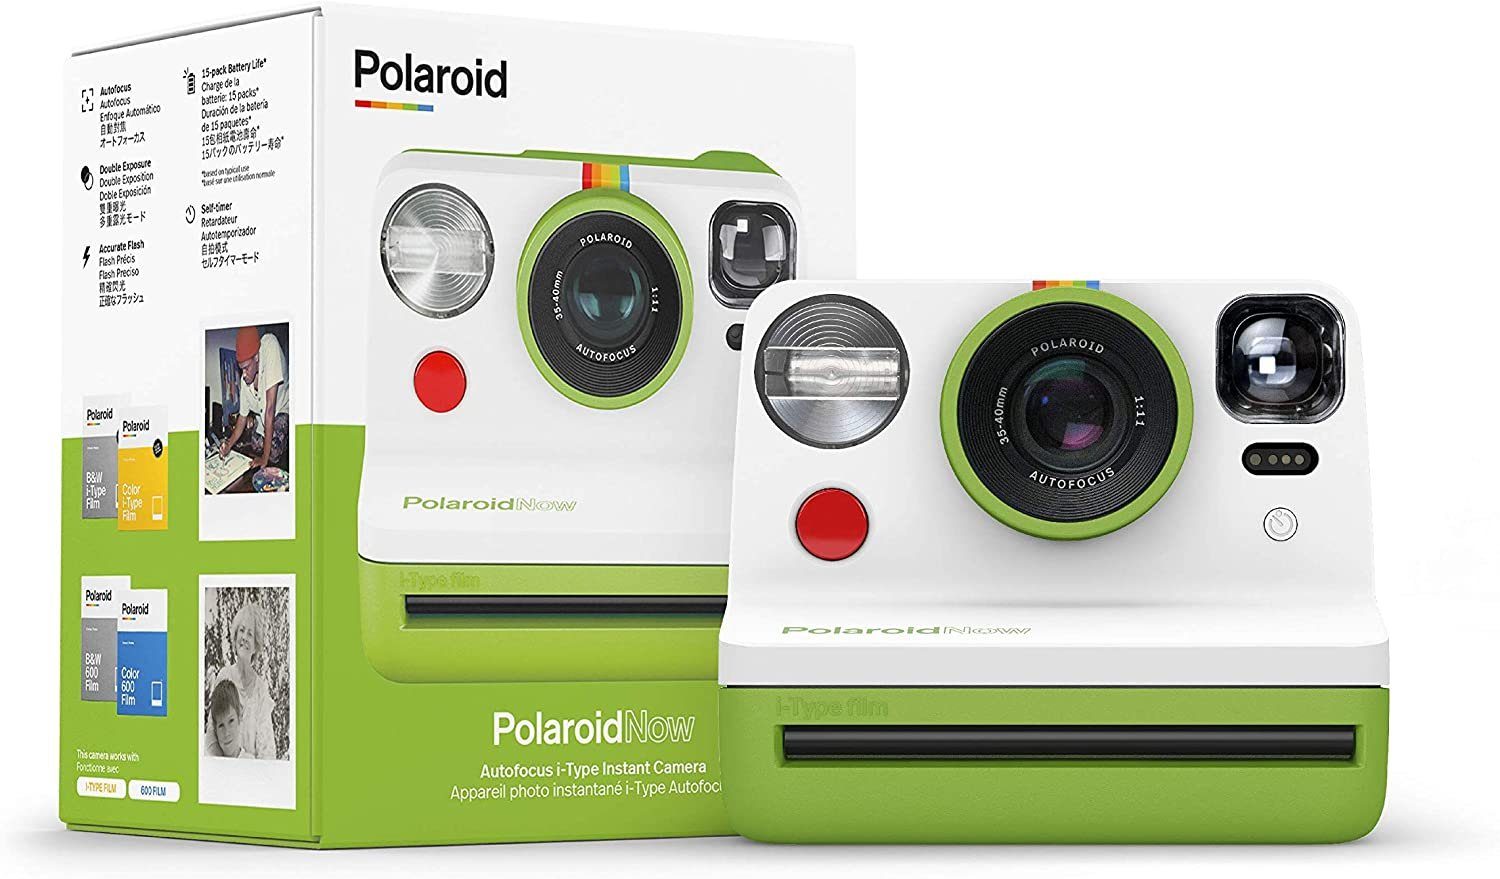 Sofortbildkamera - NOW Polaroid Sofortbildkamera Grün